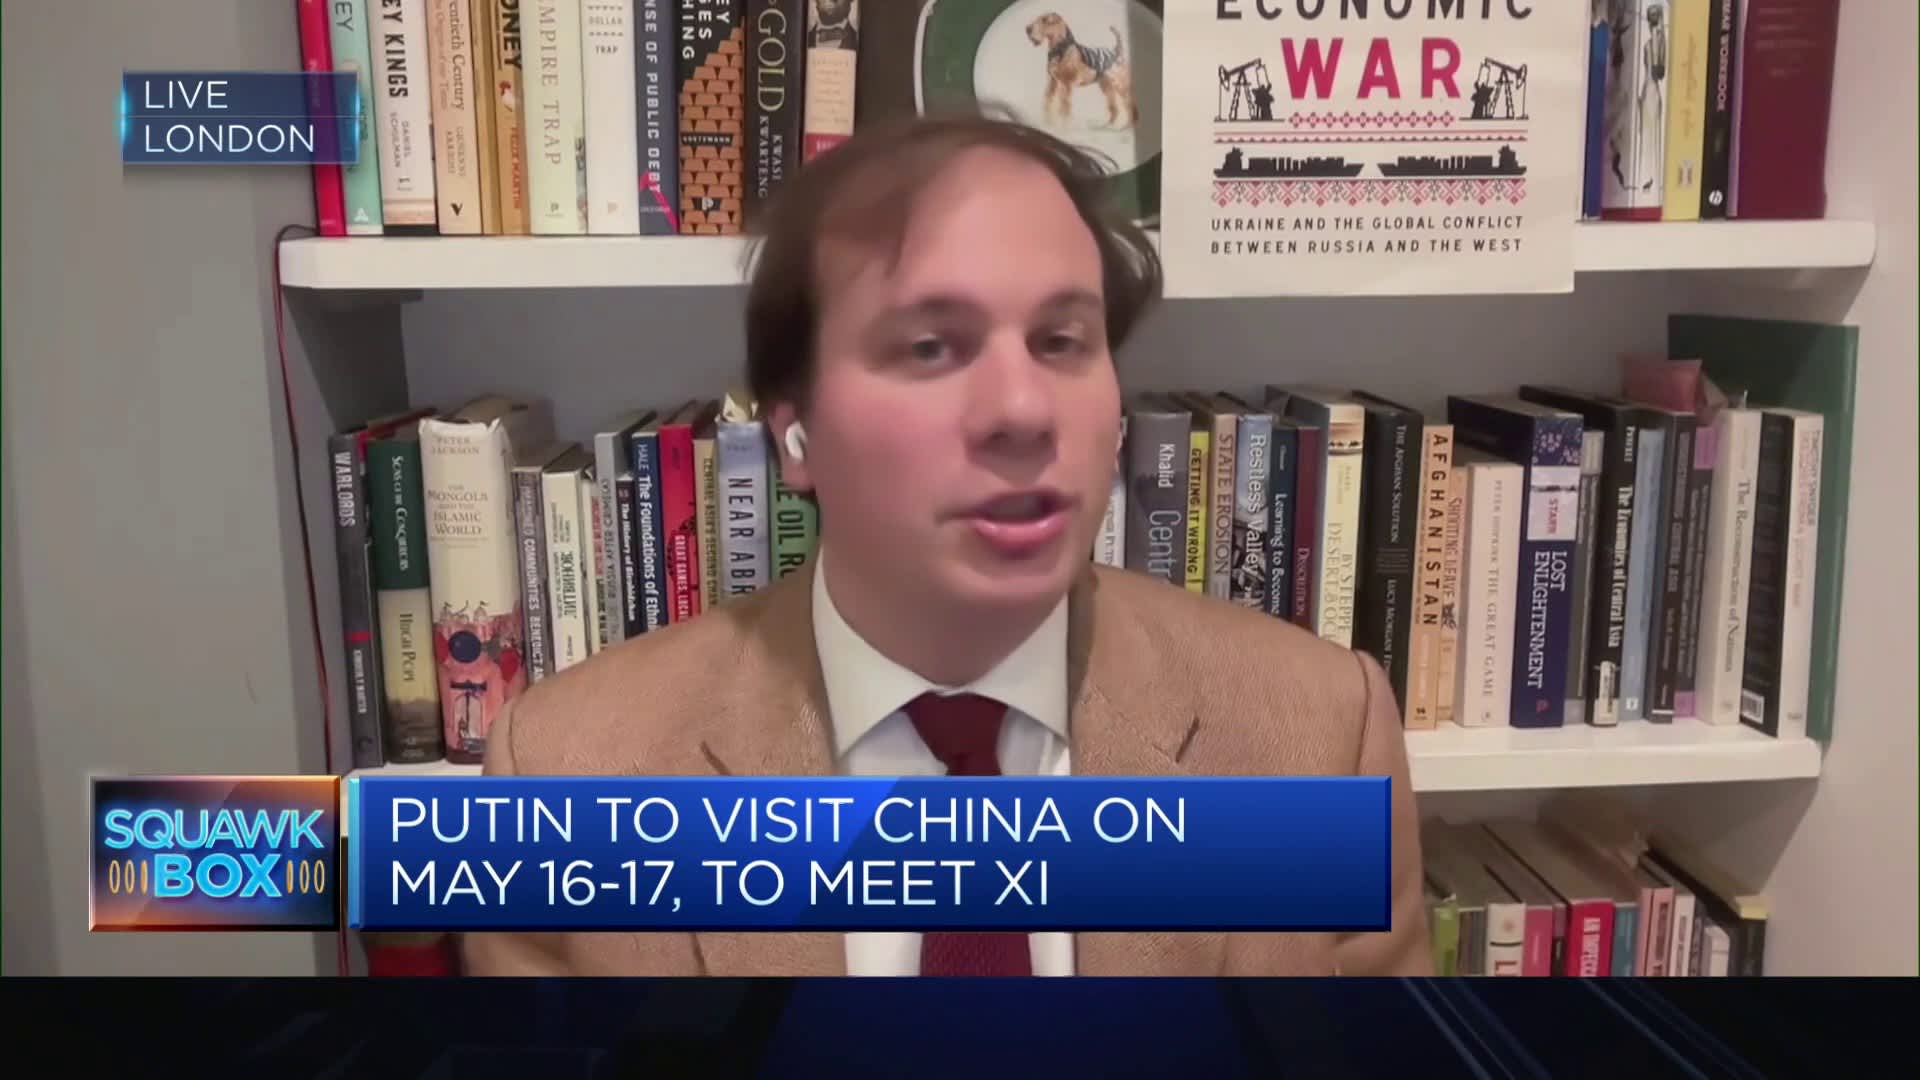 Putin wants three things from China, analyst says